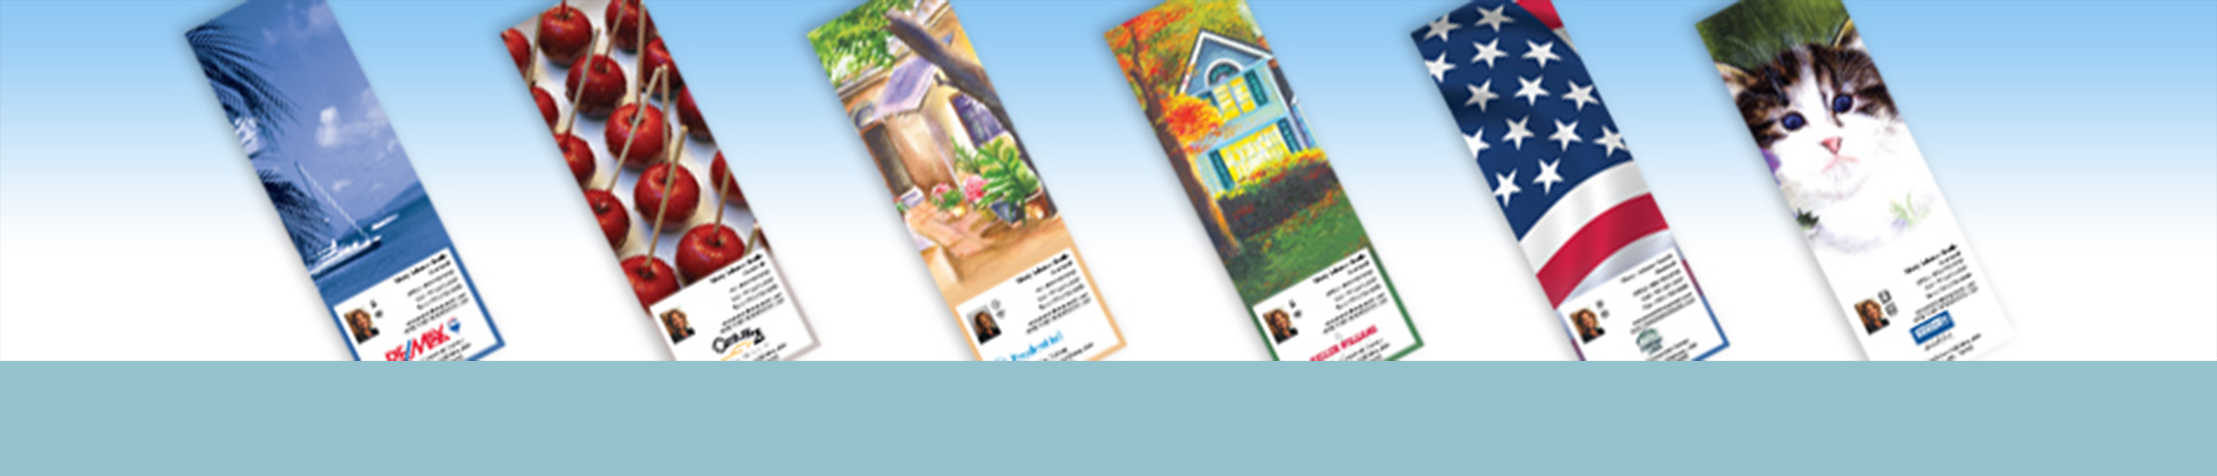 Real Estate Bookmarks